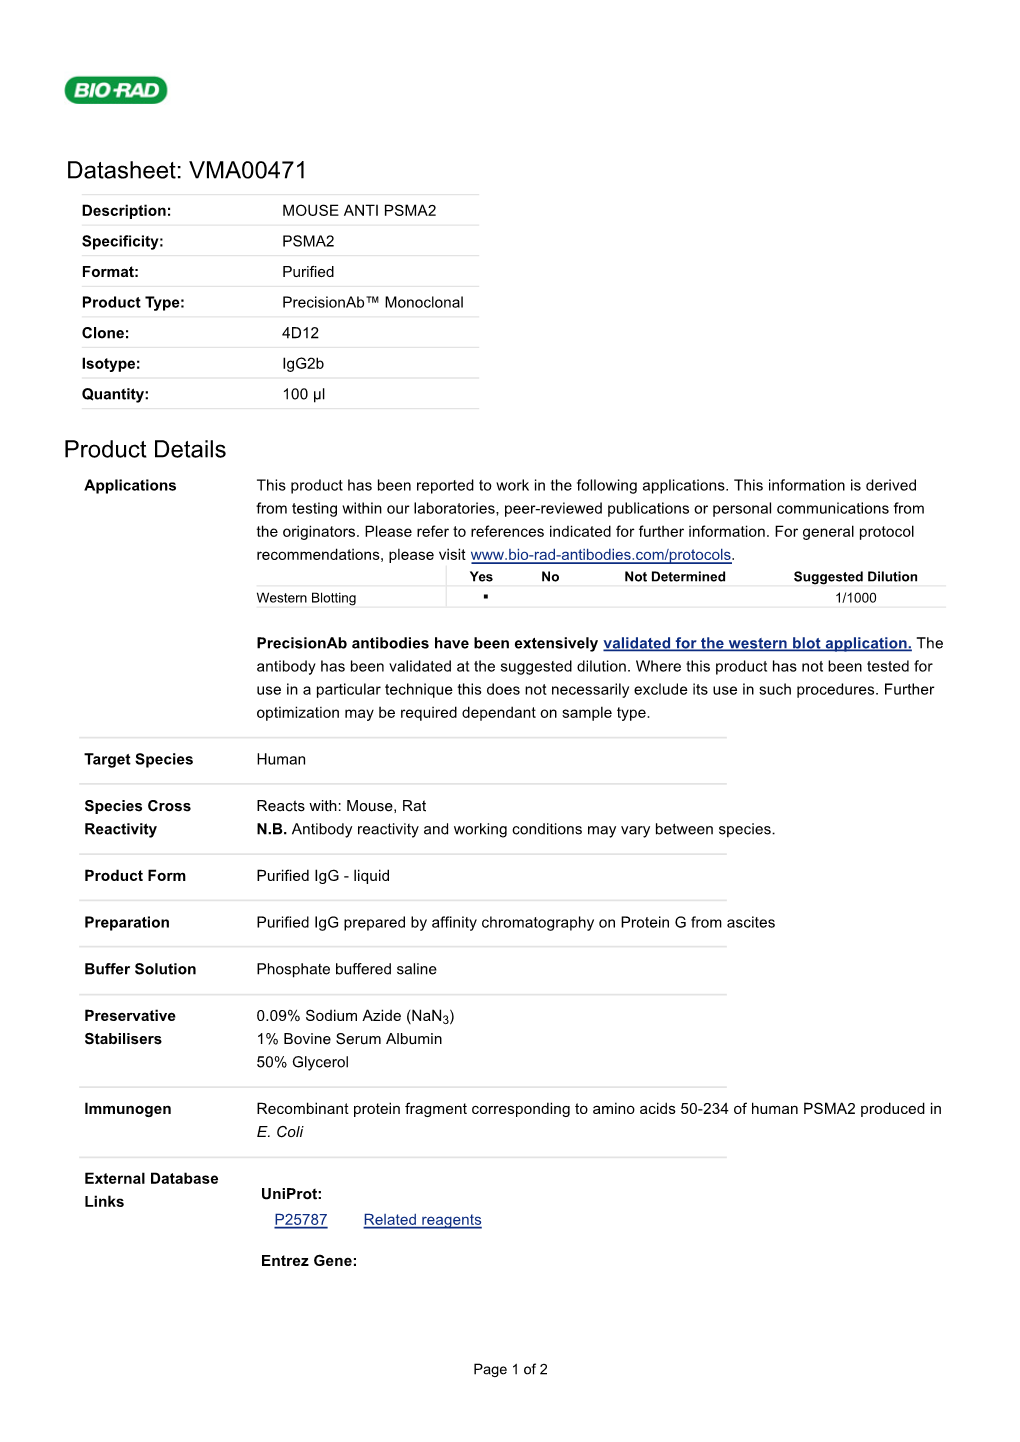 Datasheet: VMA00471 Product Details